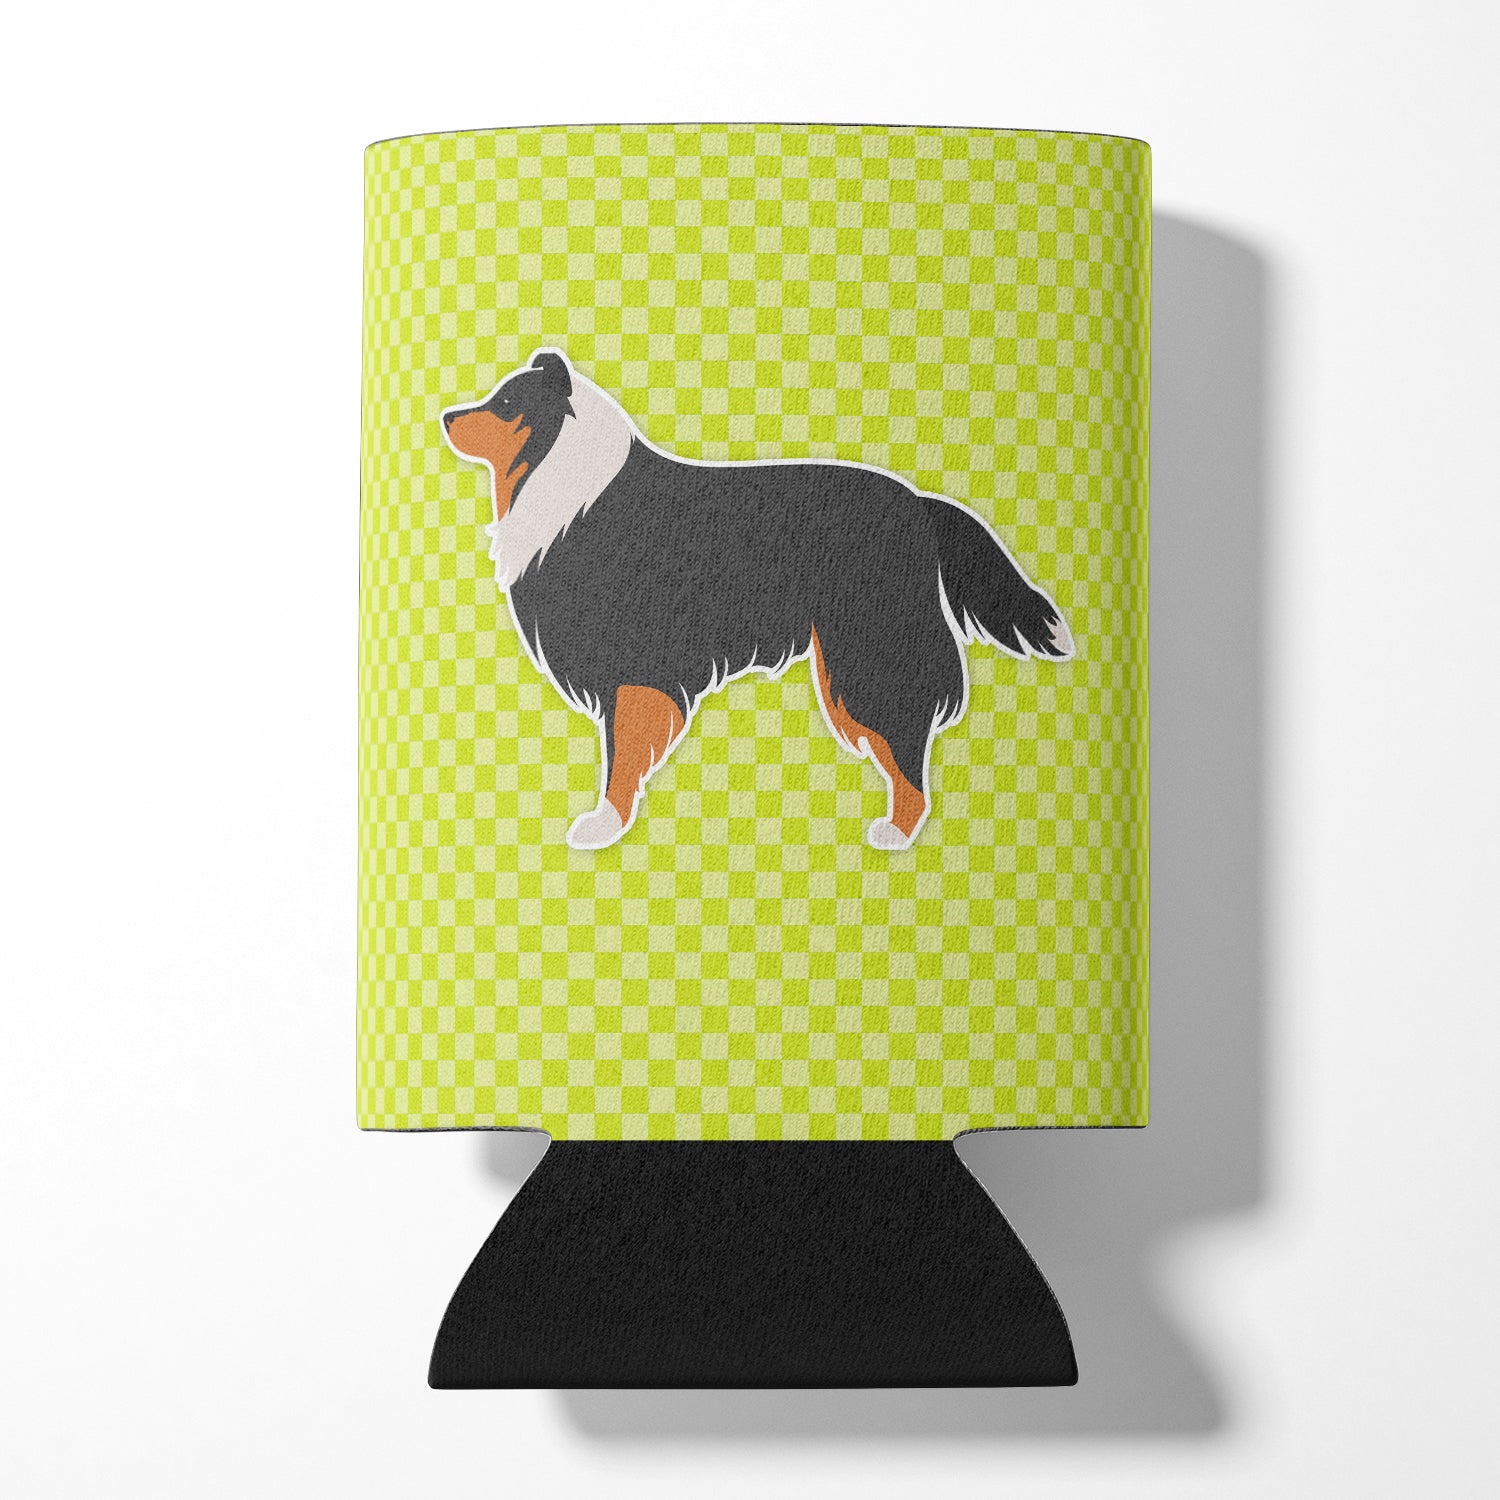 Sheltie/Shetland Sheepdog Checkerboard Green Can or Bottle Hugger BB3830CC